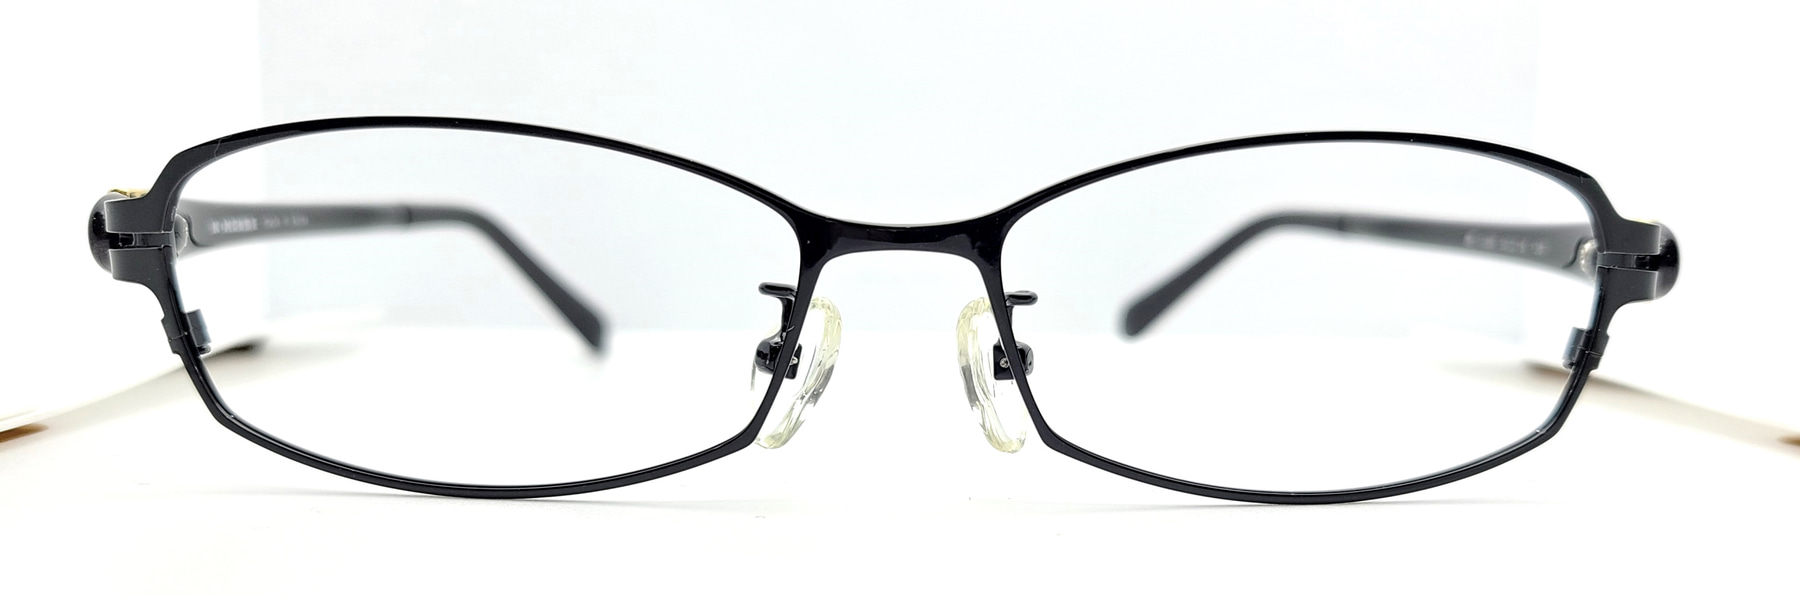 MINIHOUSE M-1085, Korean glasses, sunglasses, eyeglasses, glasses